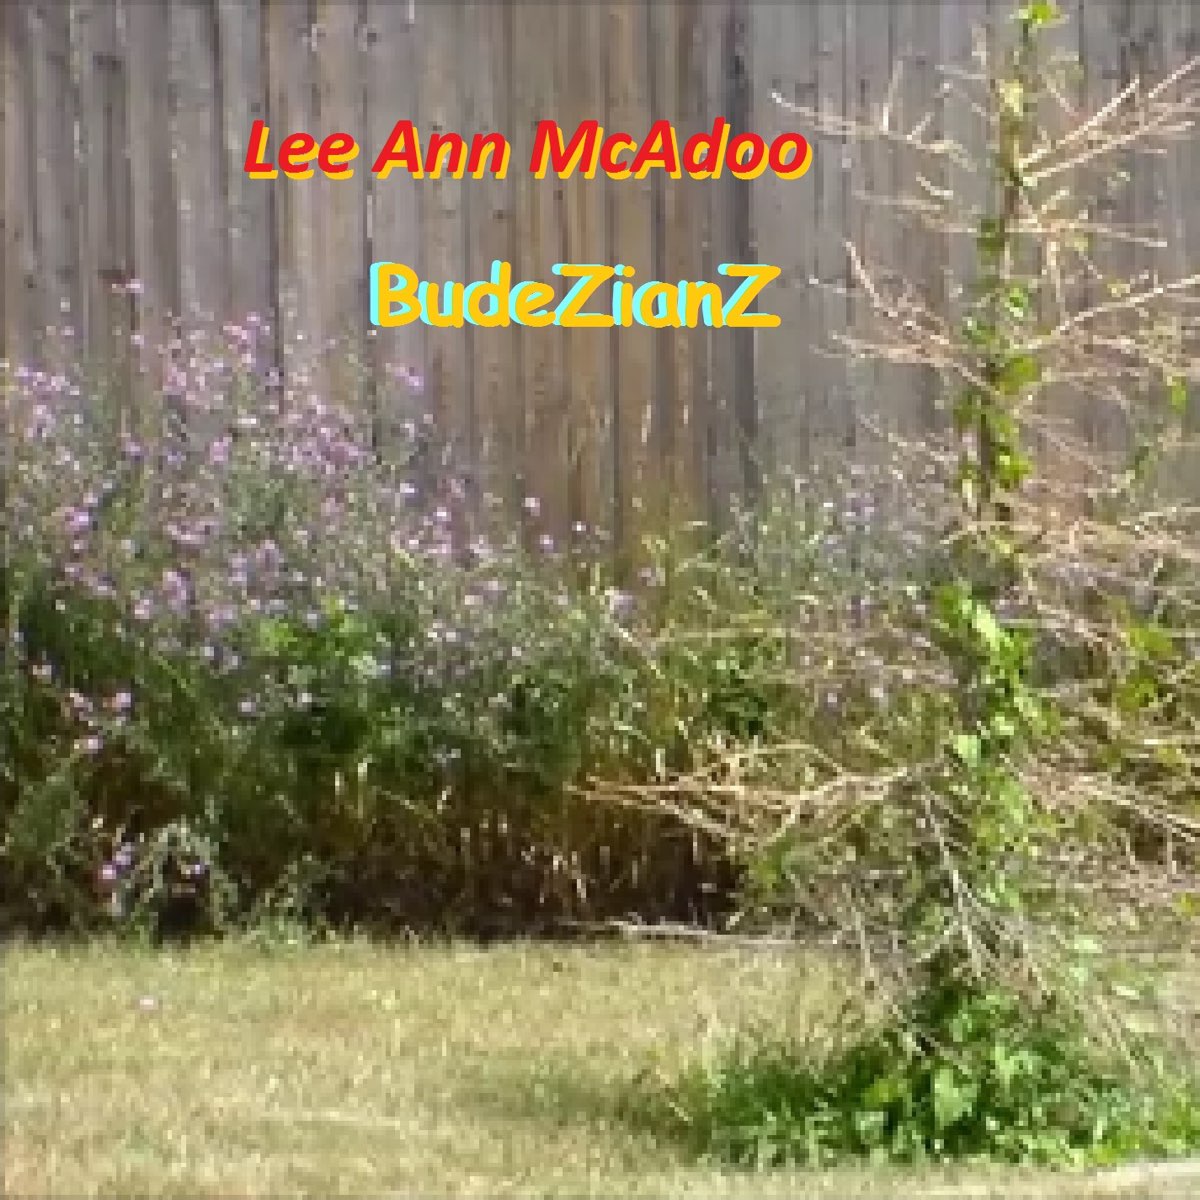 Lee Ann McAdoo - Single by Budezianz on Apple Music